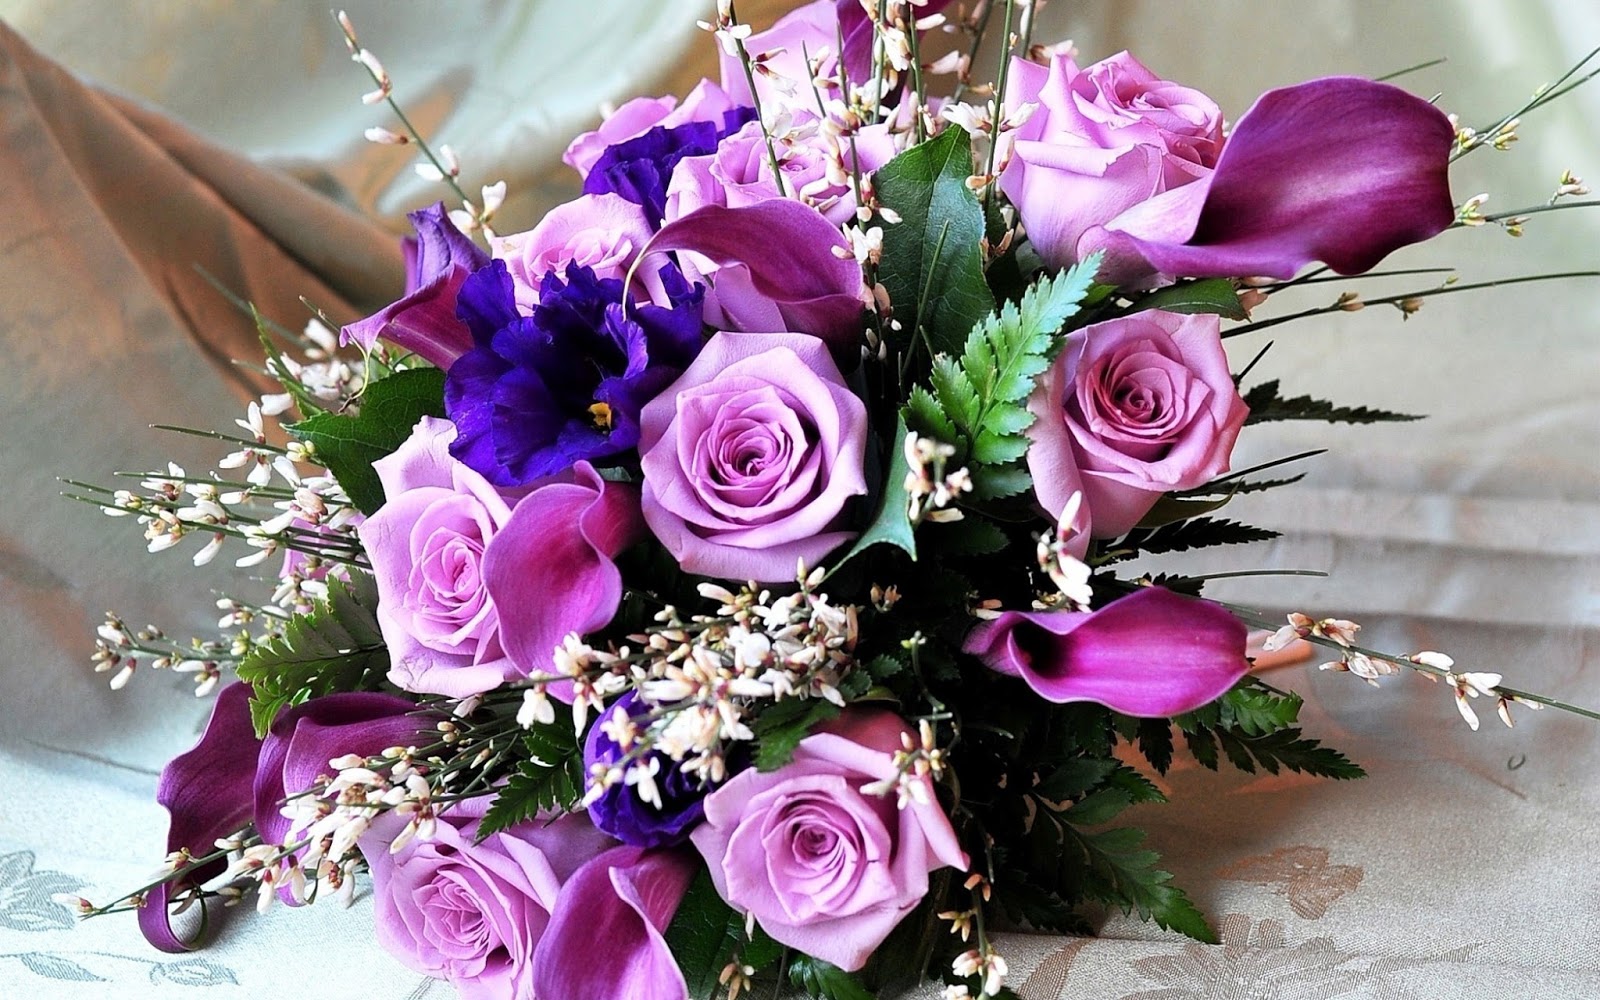 roses_calla_lilies_flowers_bouquet_decoration_leaves_33511_3840x2400.jpg